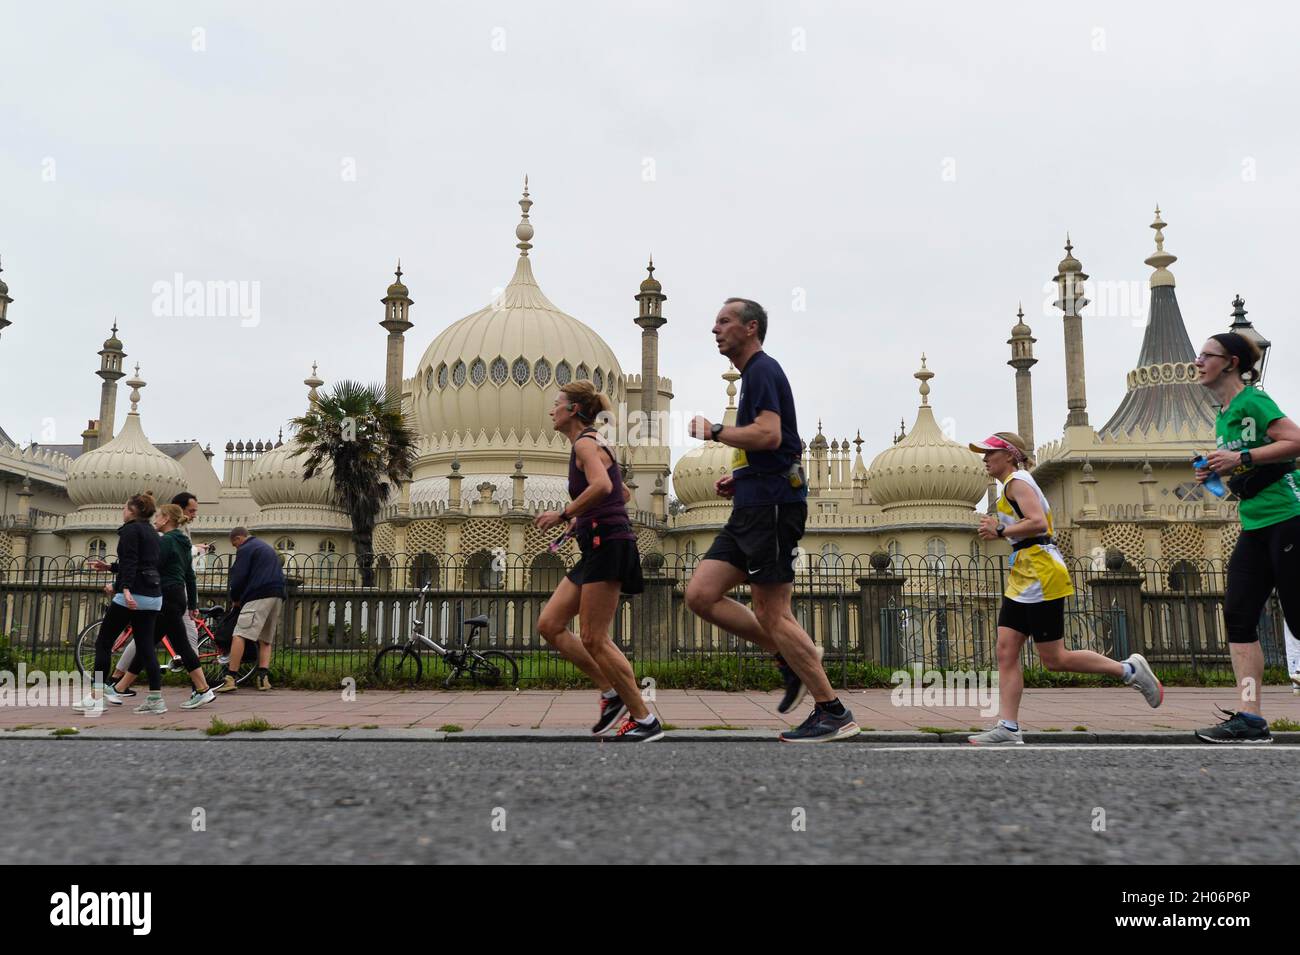 Brighton Half Marathon 2021. Picture Terry Applin Stock Photo